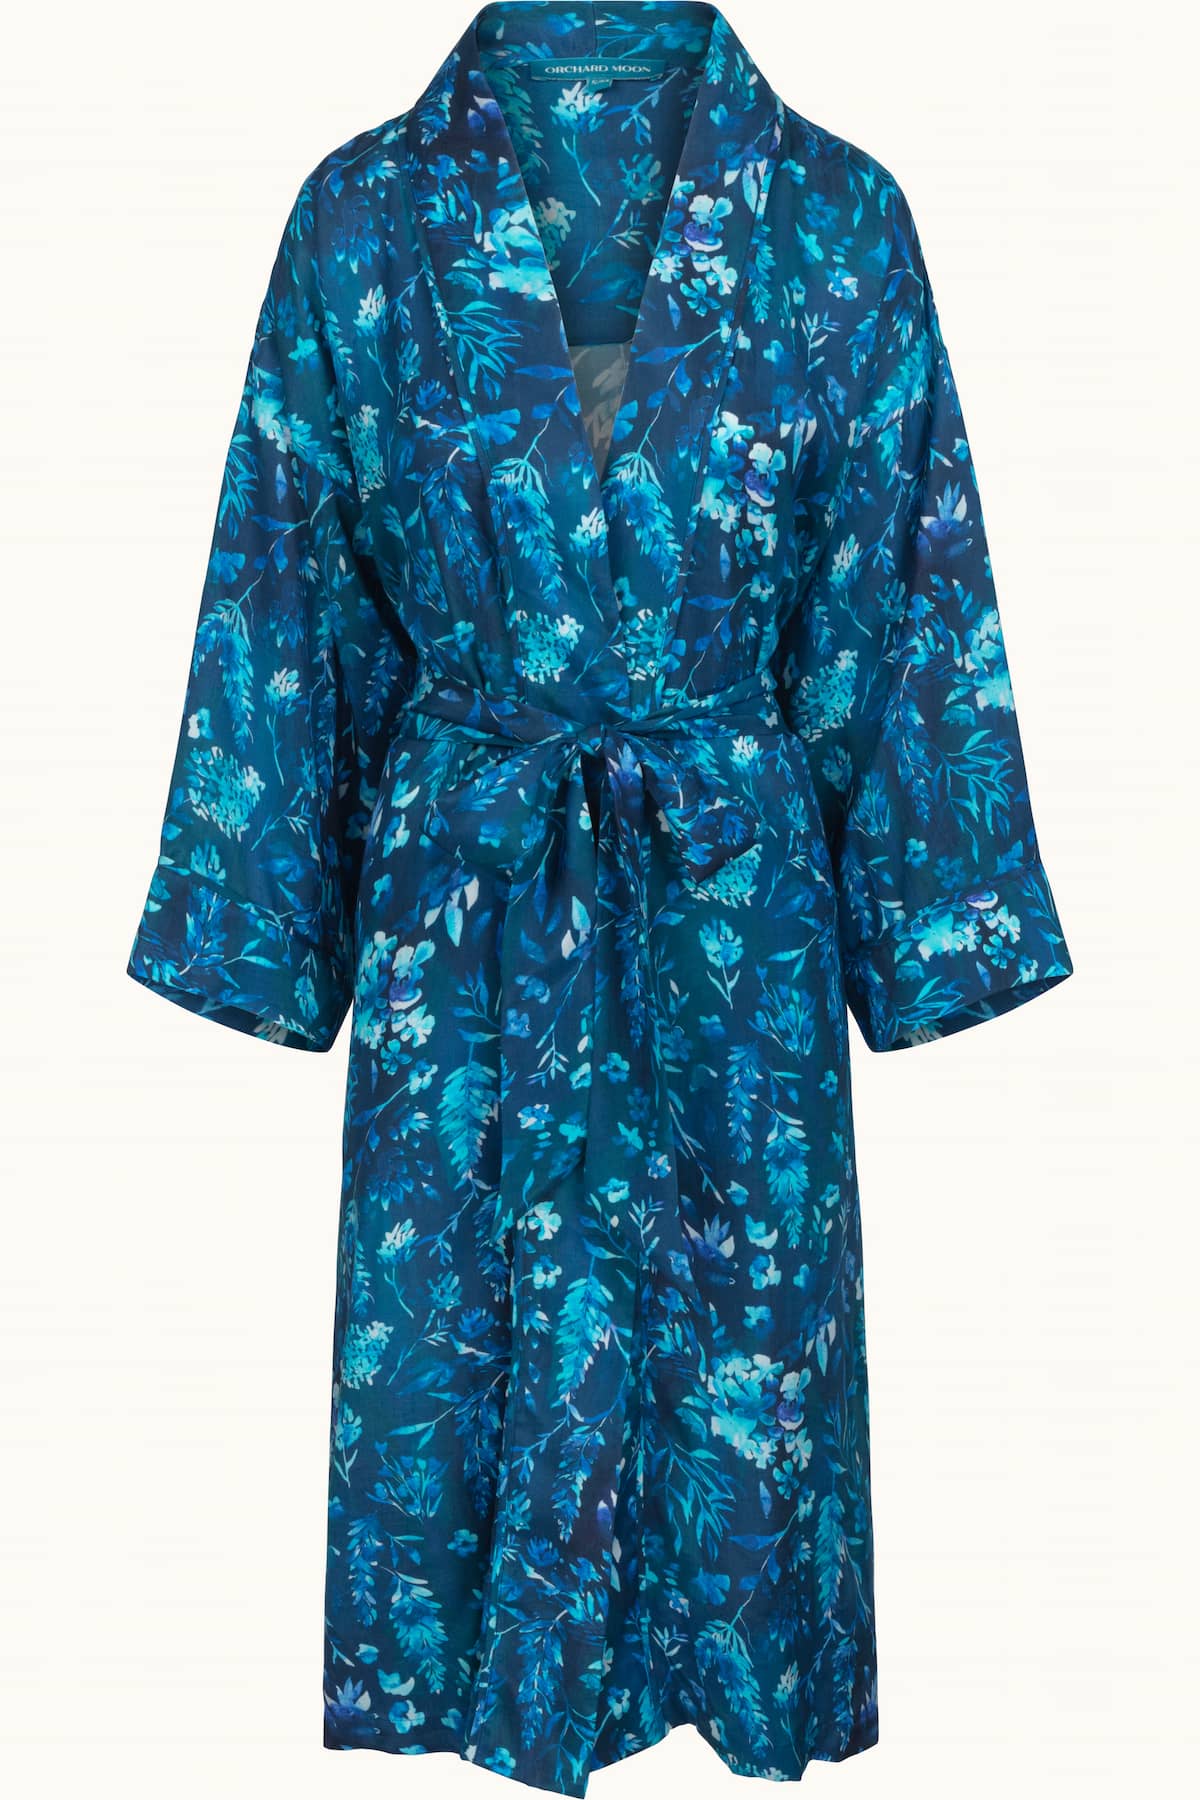 Cerulean Dream - Kimono Robes - Flatlay 1 - Luxury Sustainable Kimono Robes - Orchard Moon